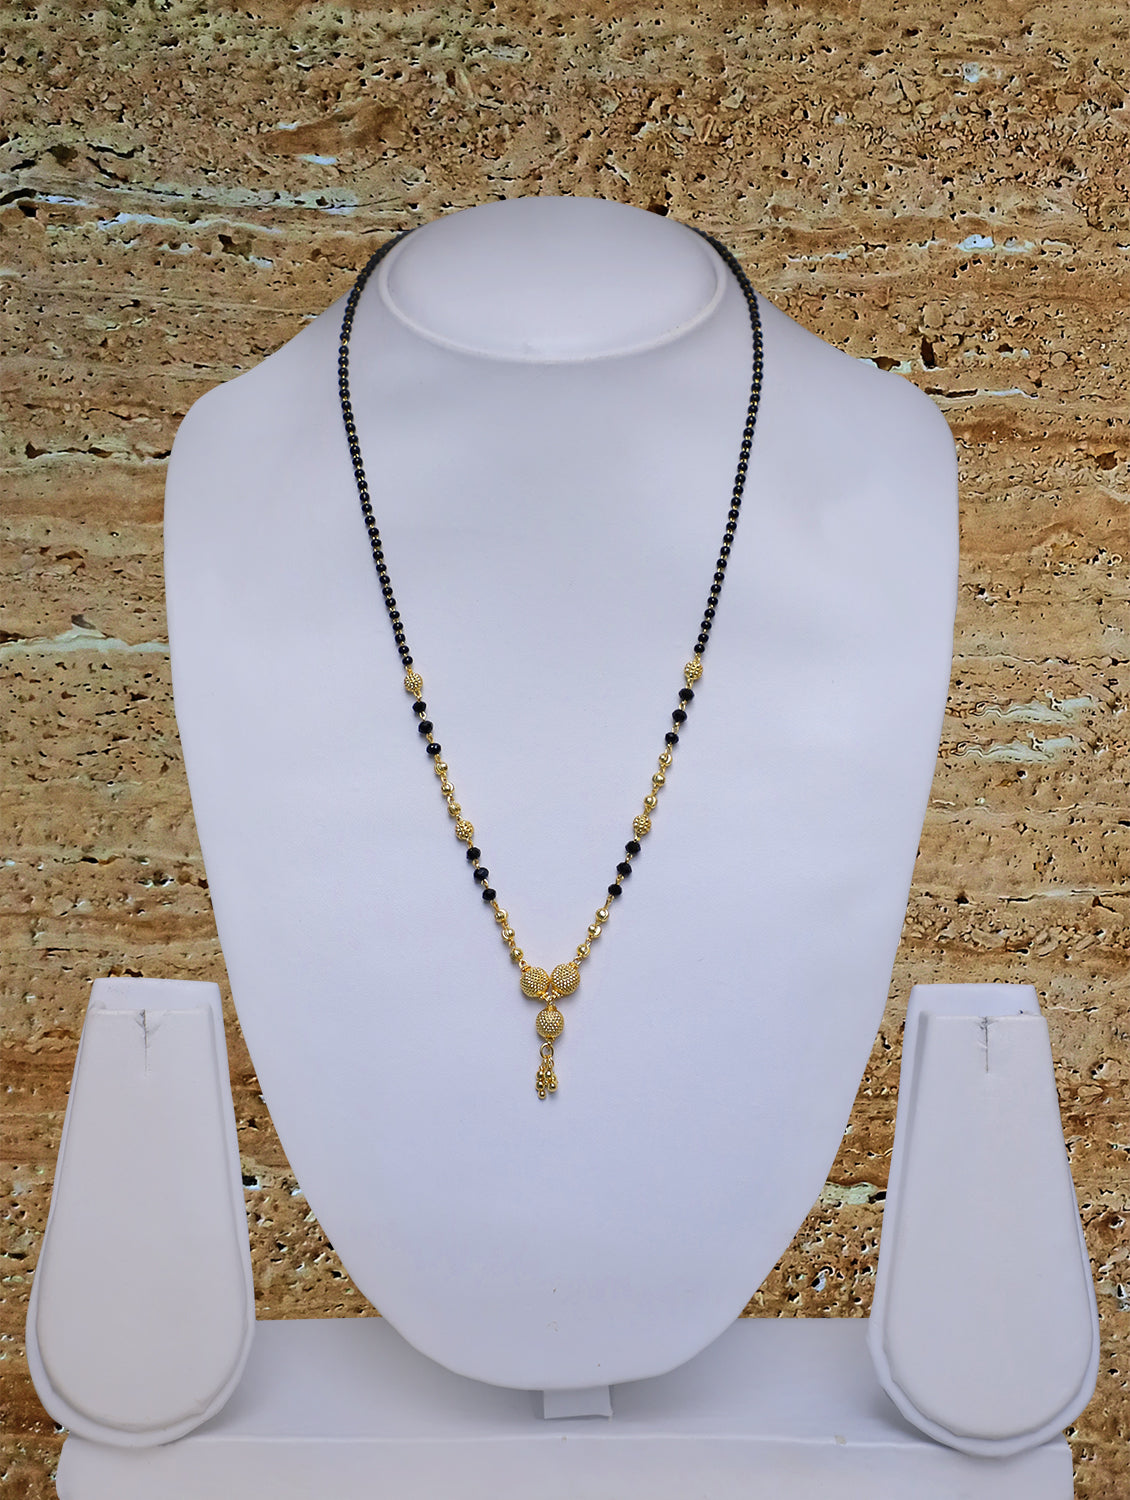 Digital Dress Room Short Mangalsutra Designs Gold Plated Latest Black Bead 3 Golden Mani Latkan 18 Inches Mangalsutra